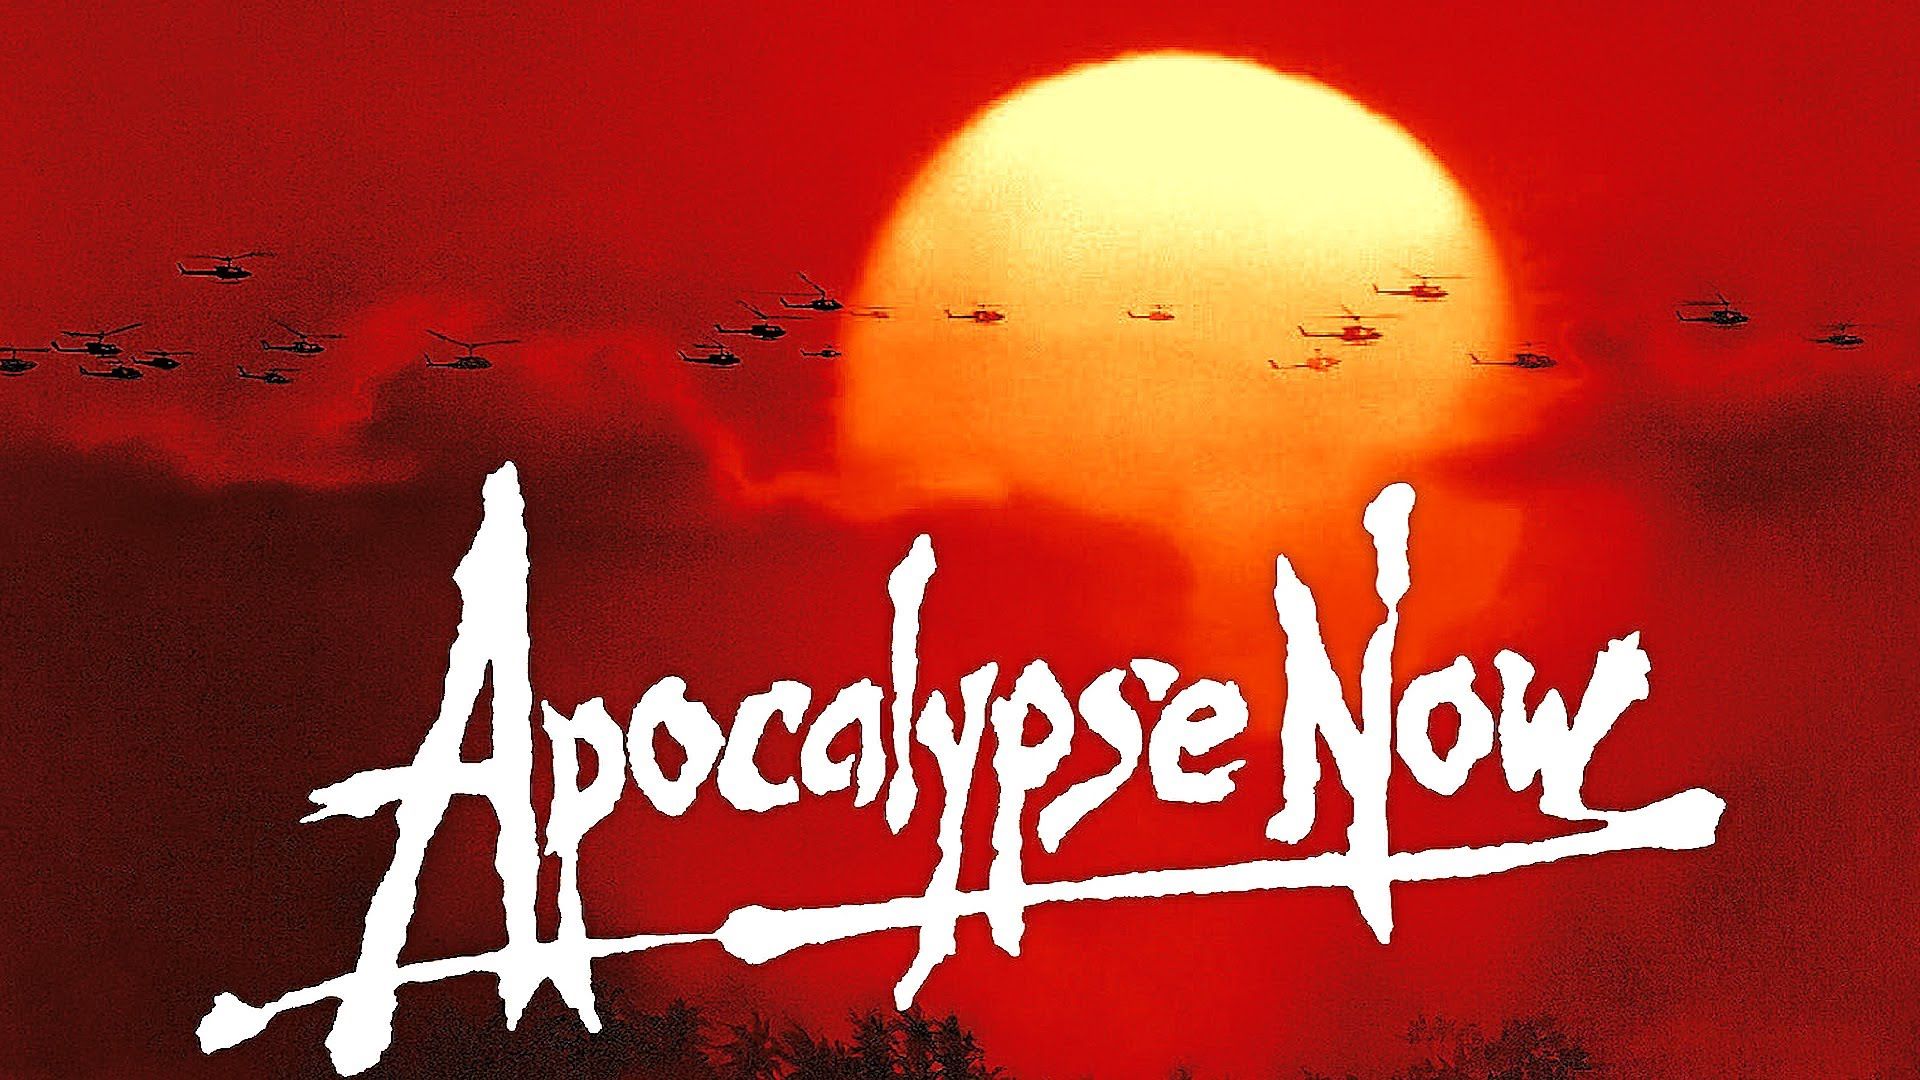 Apocalypse Now Wallpapers